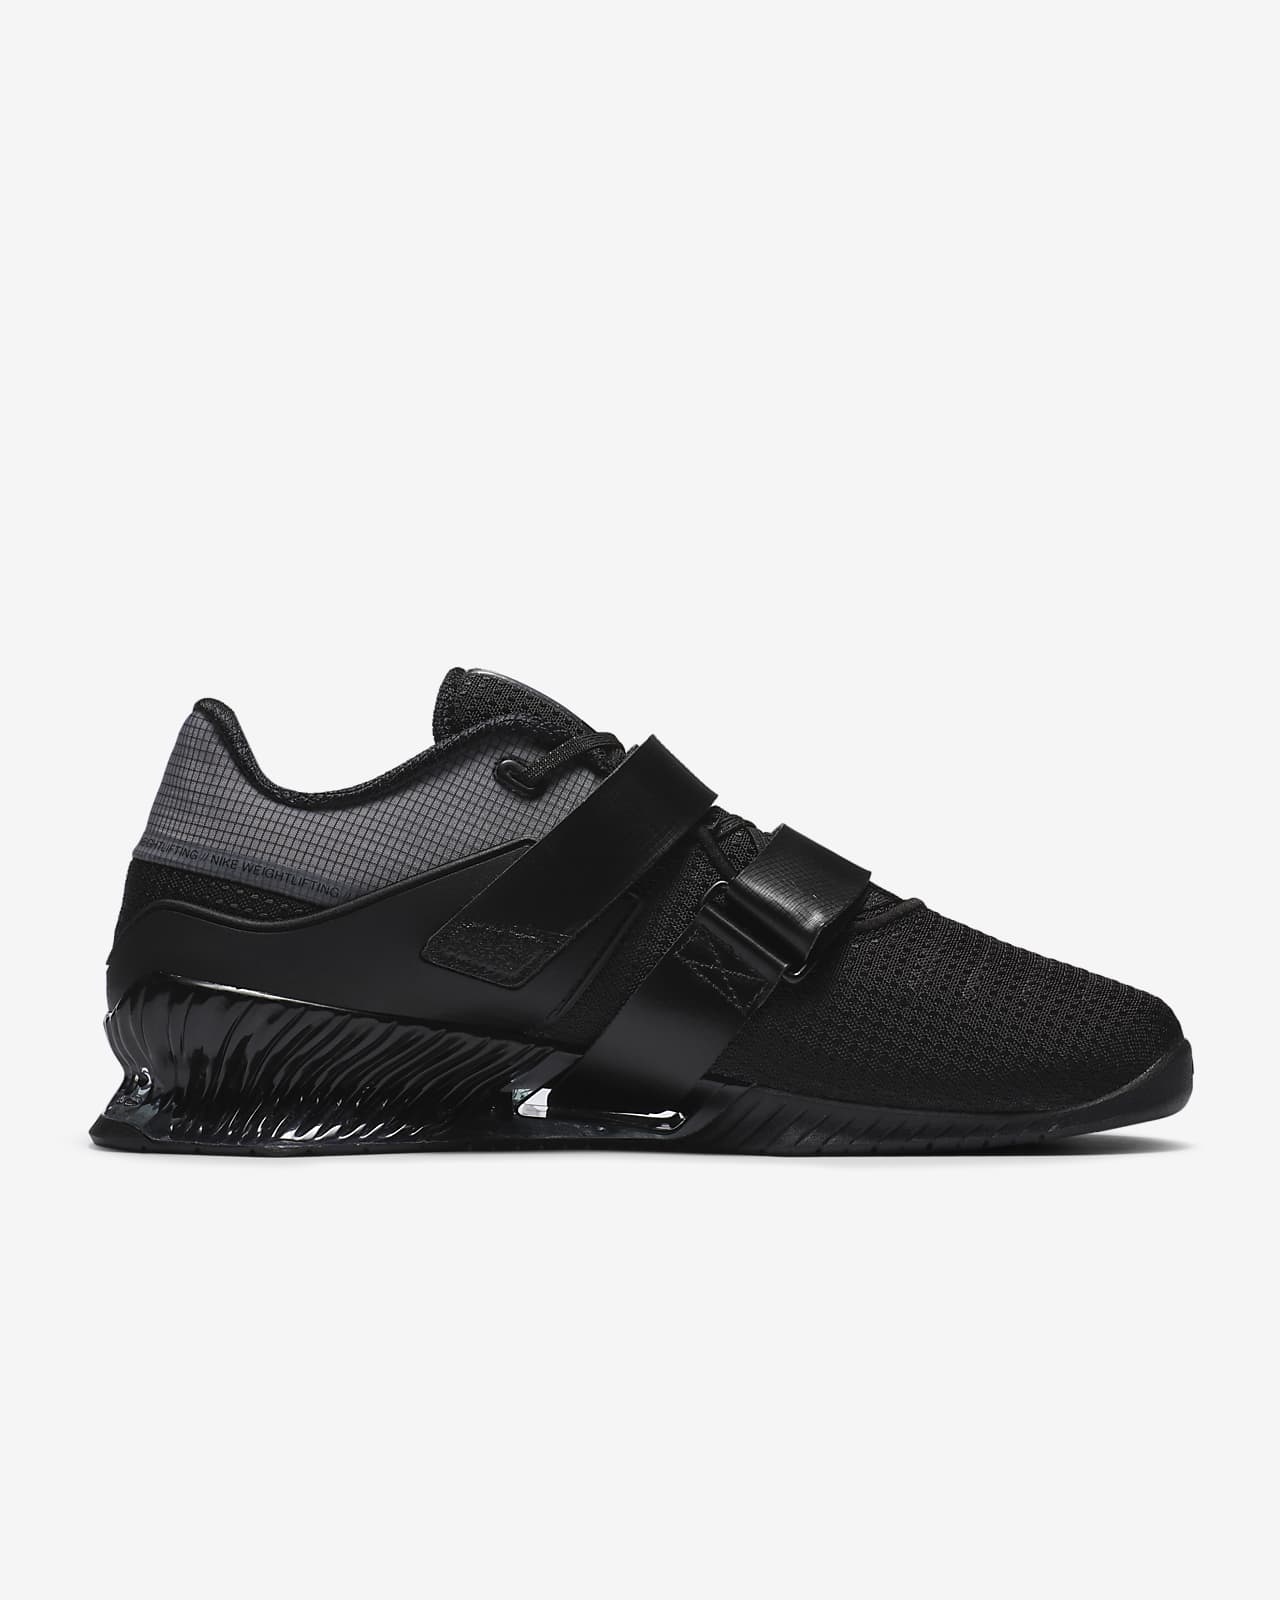 Nike Romaleos 4 Training Shoes in Black/Black Size 15.0